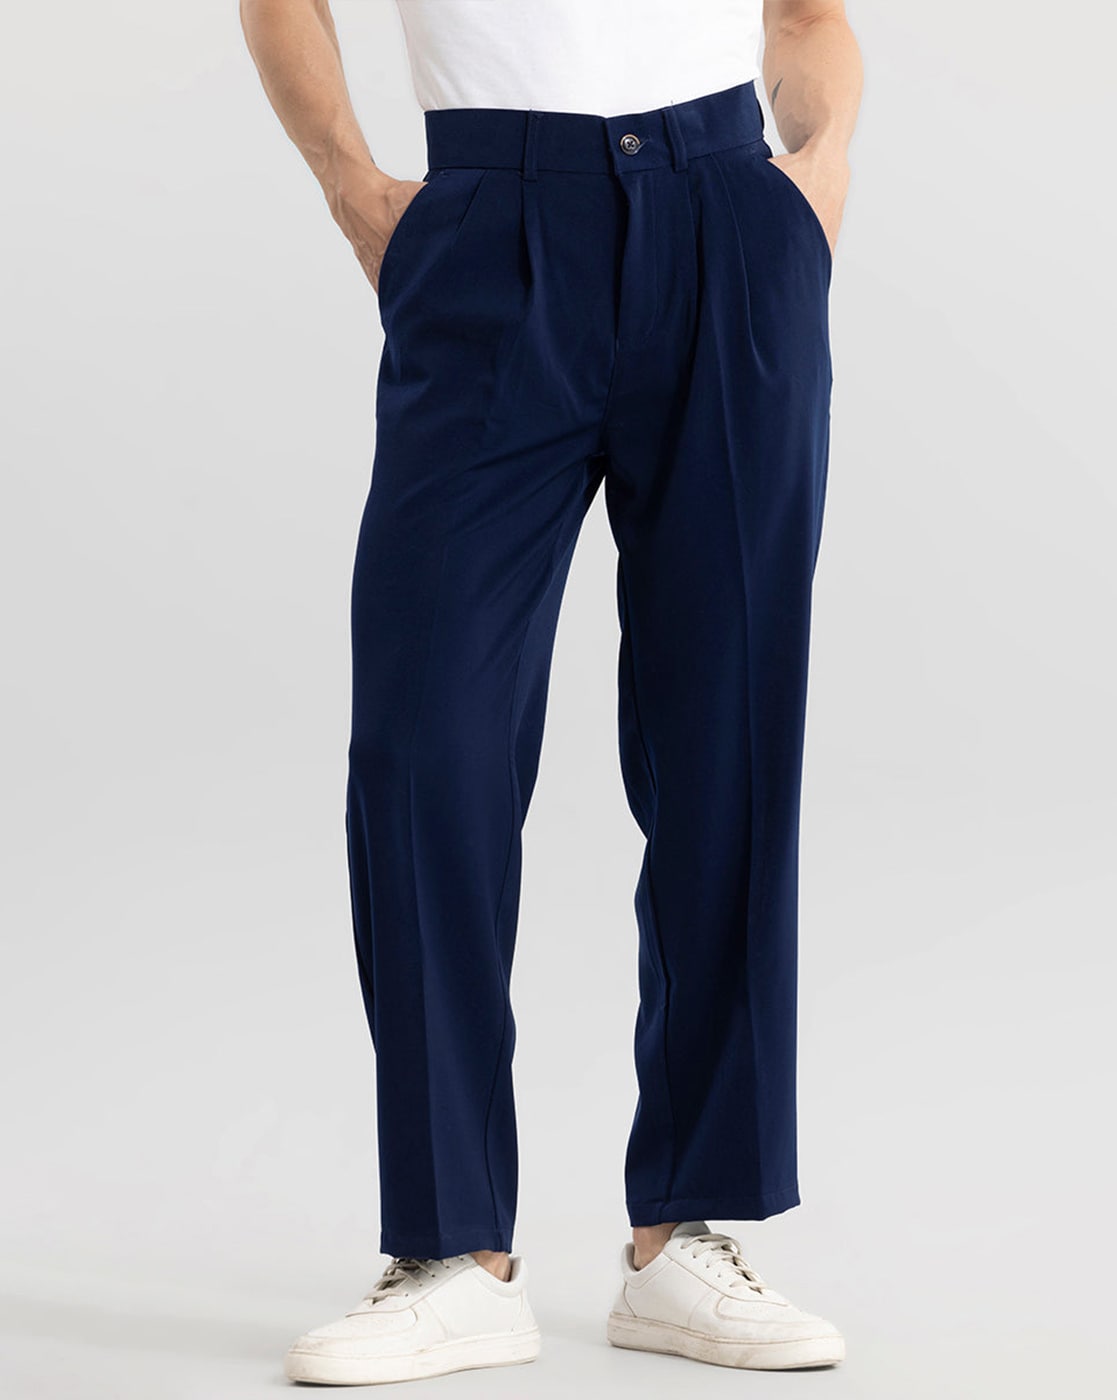 Men's Navy Blue Pants | Concitor Dark Blue Trousers